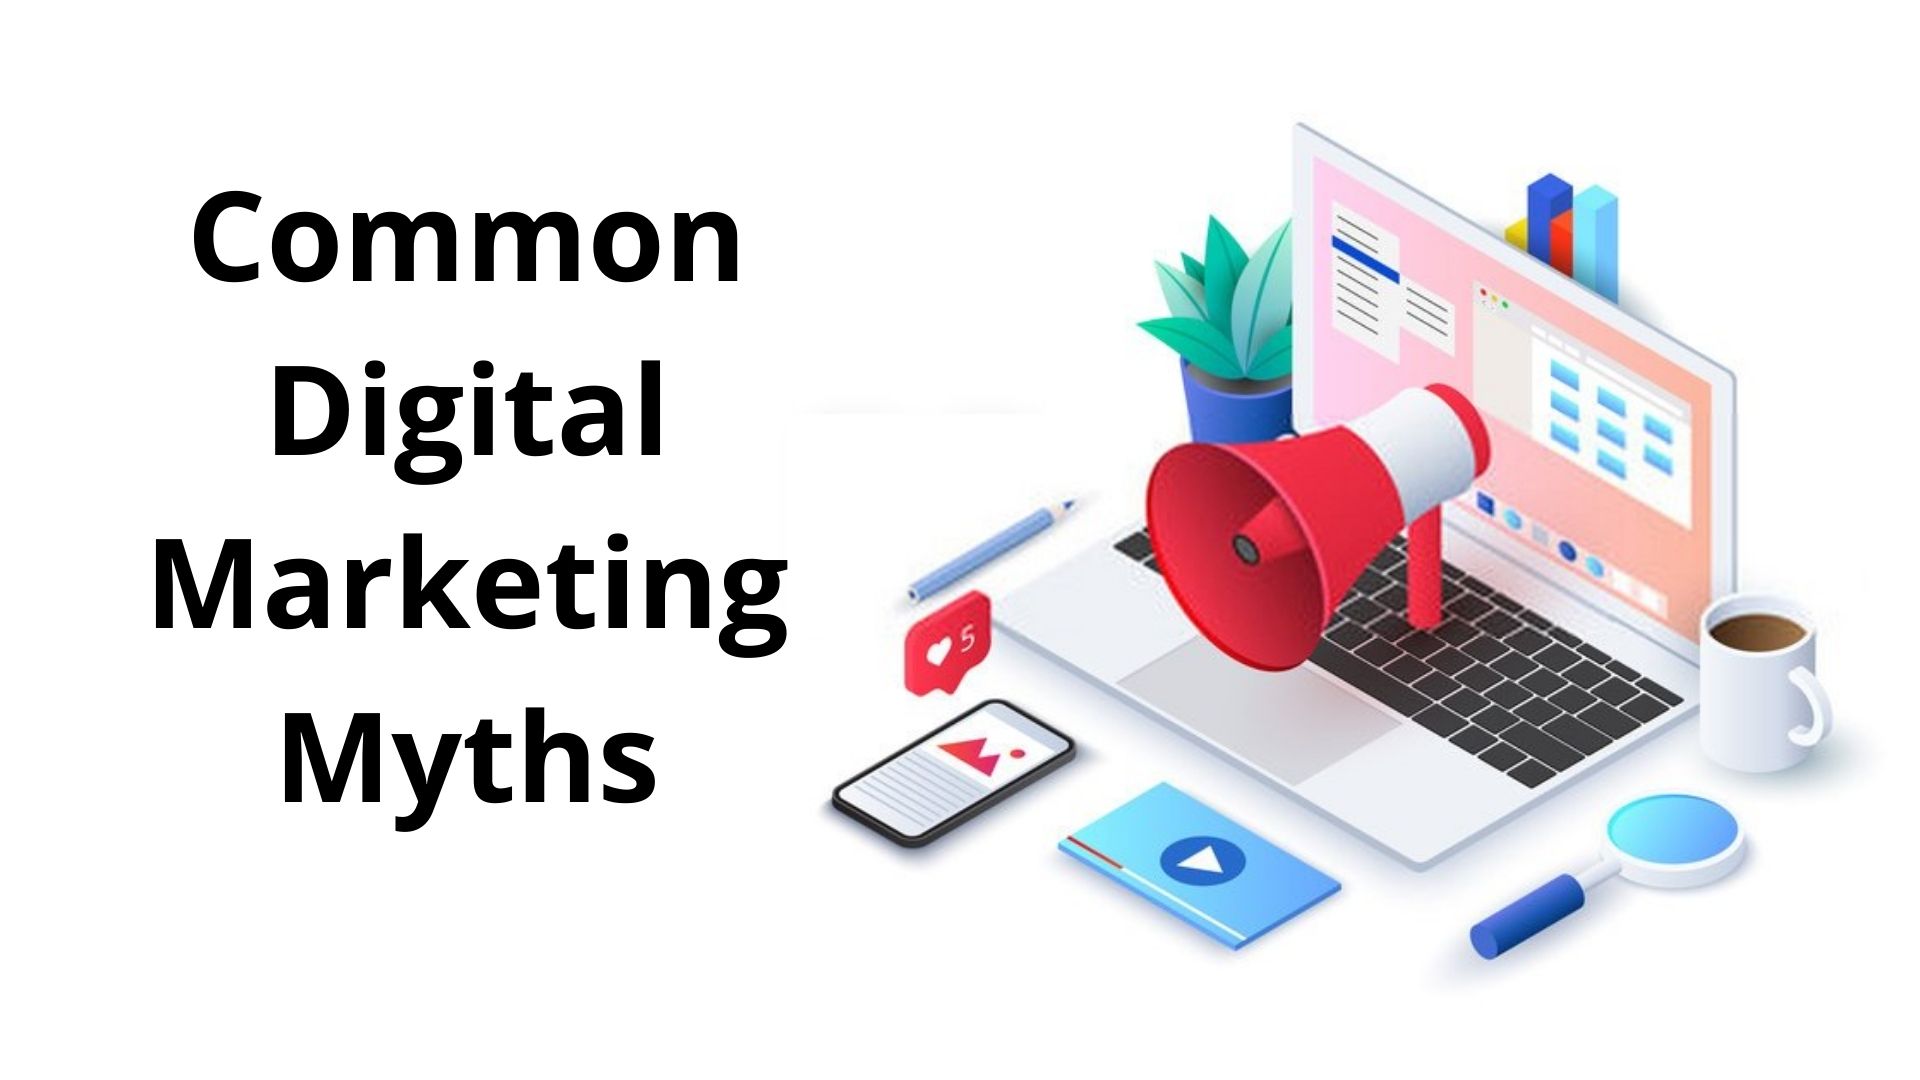 Common Digital Marketing Myths